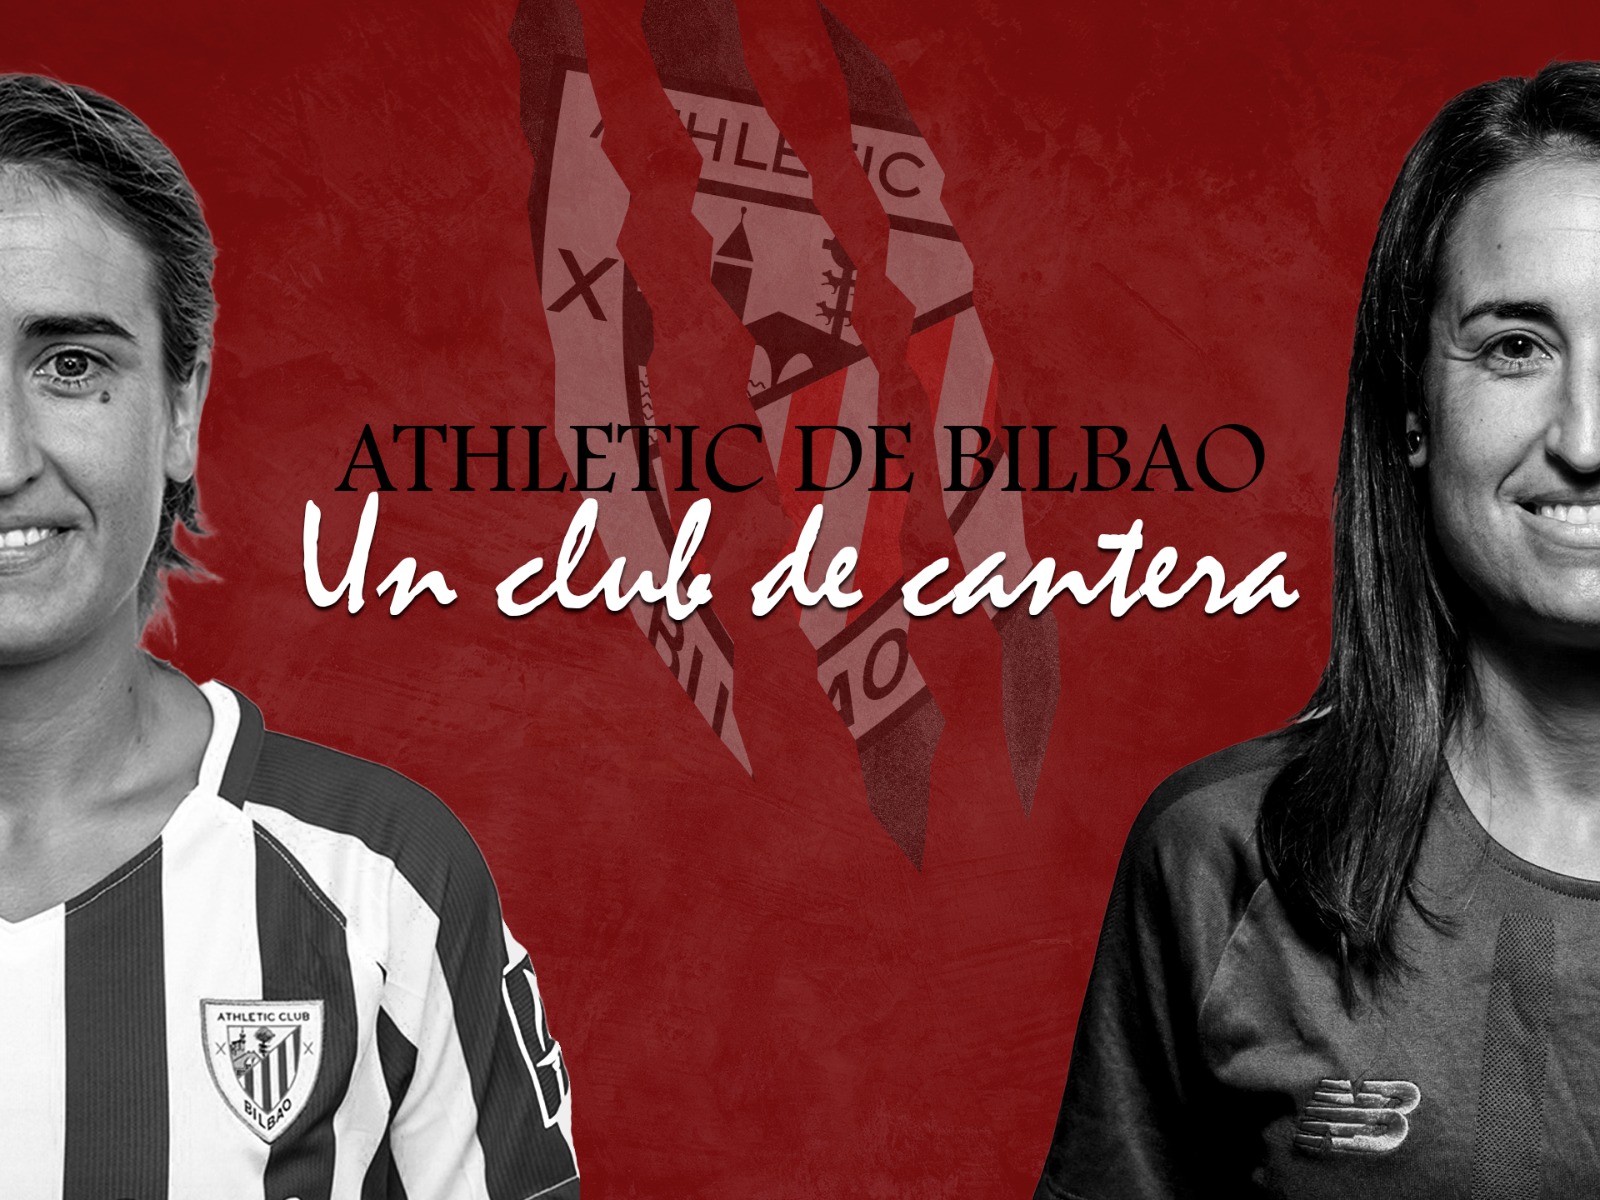 Athletic de Bilbao, un club de cantera